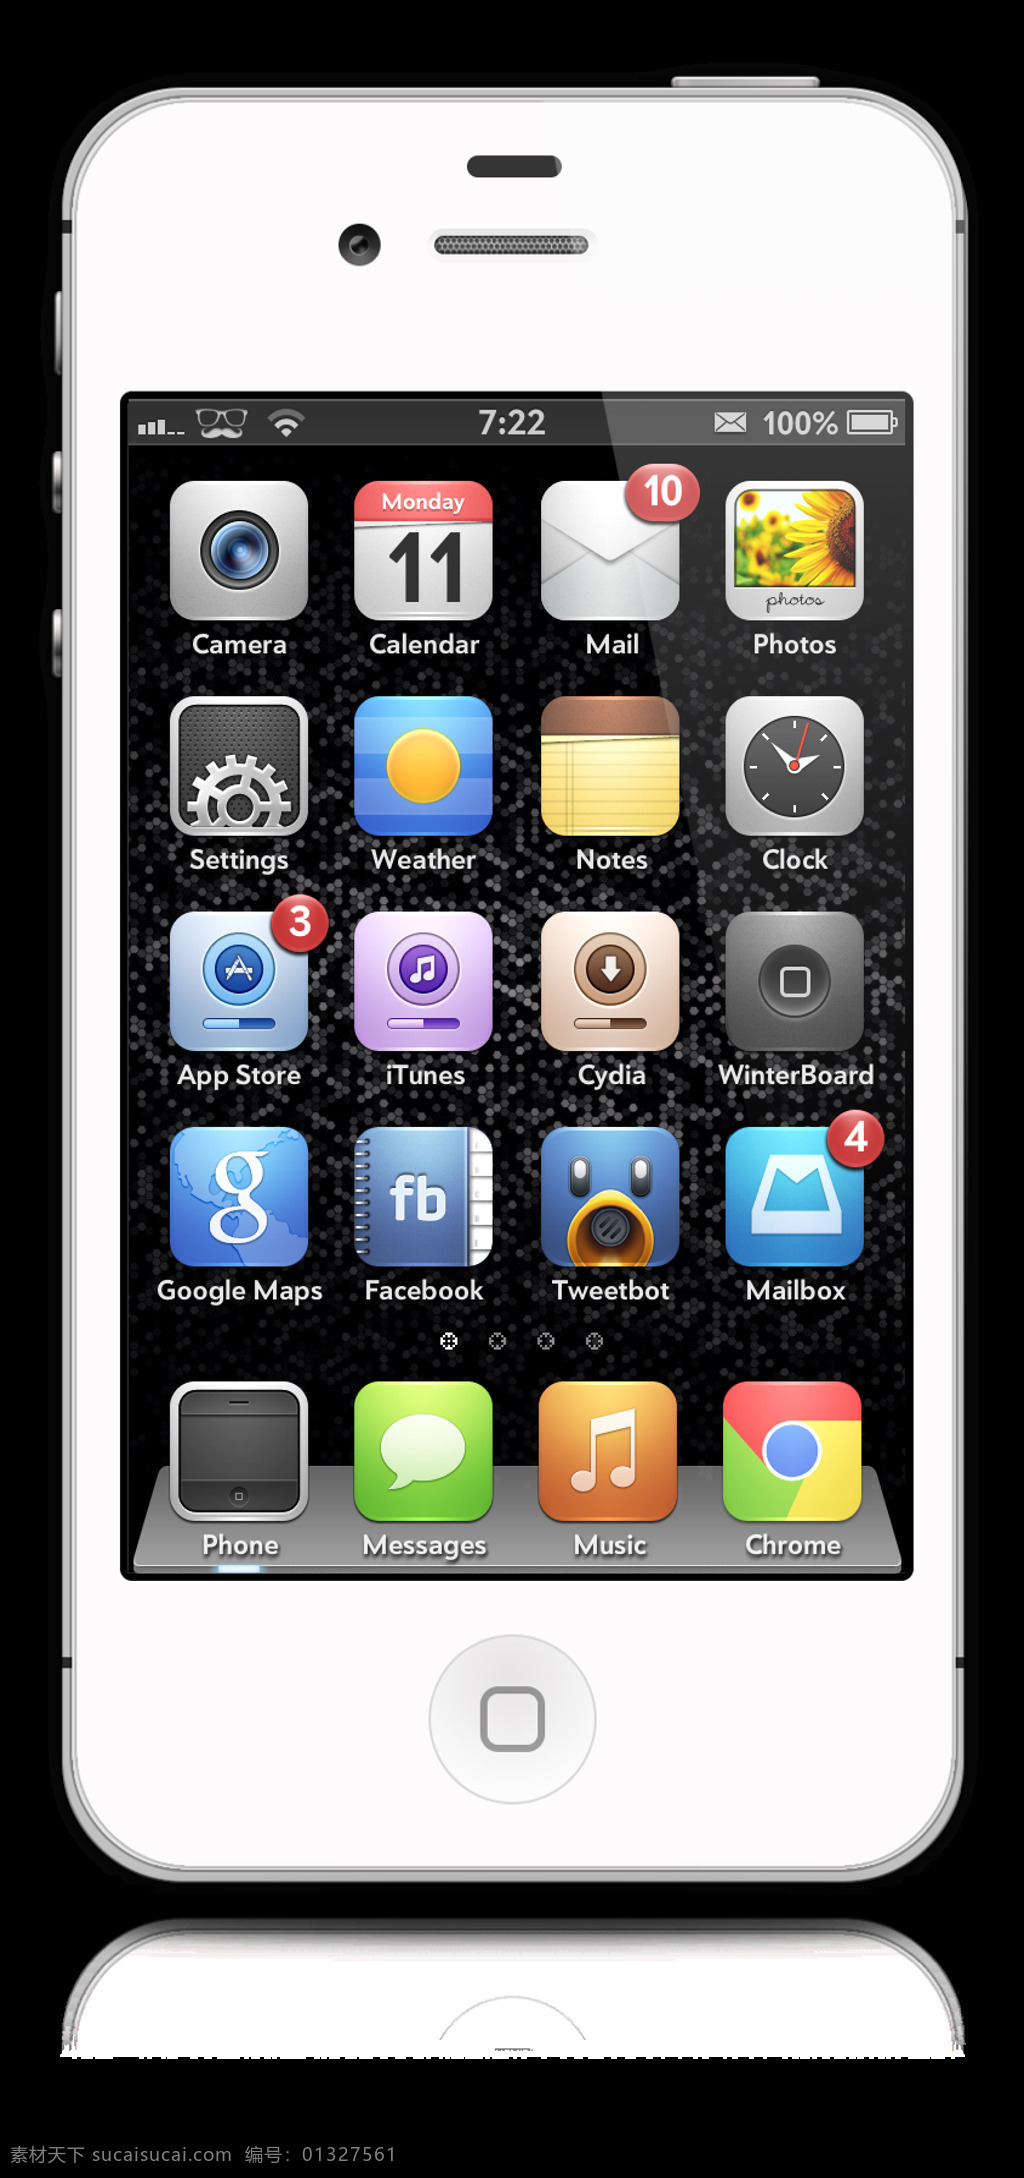 android app 界面设计 ios ipad iphone 安卓界面 手机app 拉古纳hd 界面设计下载 手机 模板下载 界面下载 免费 app图标